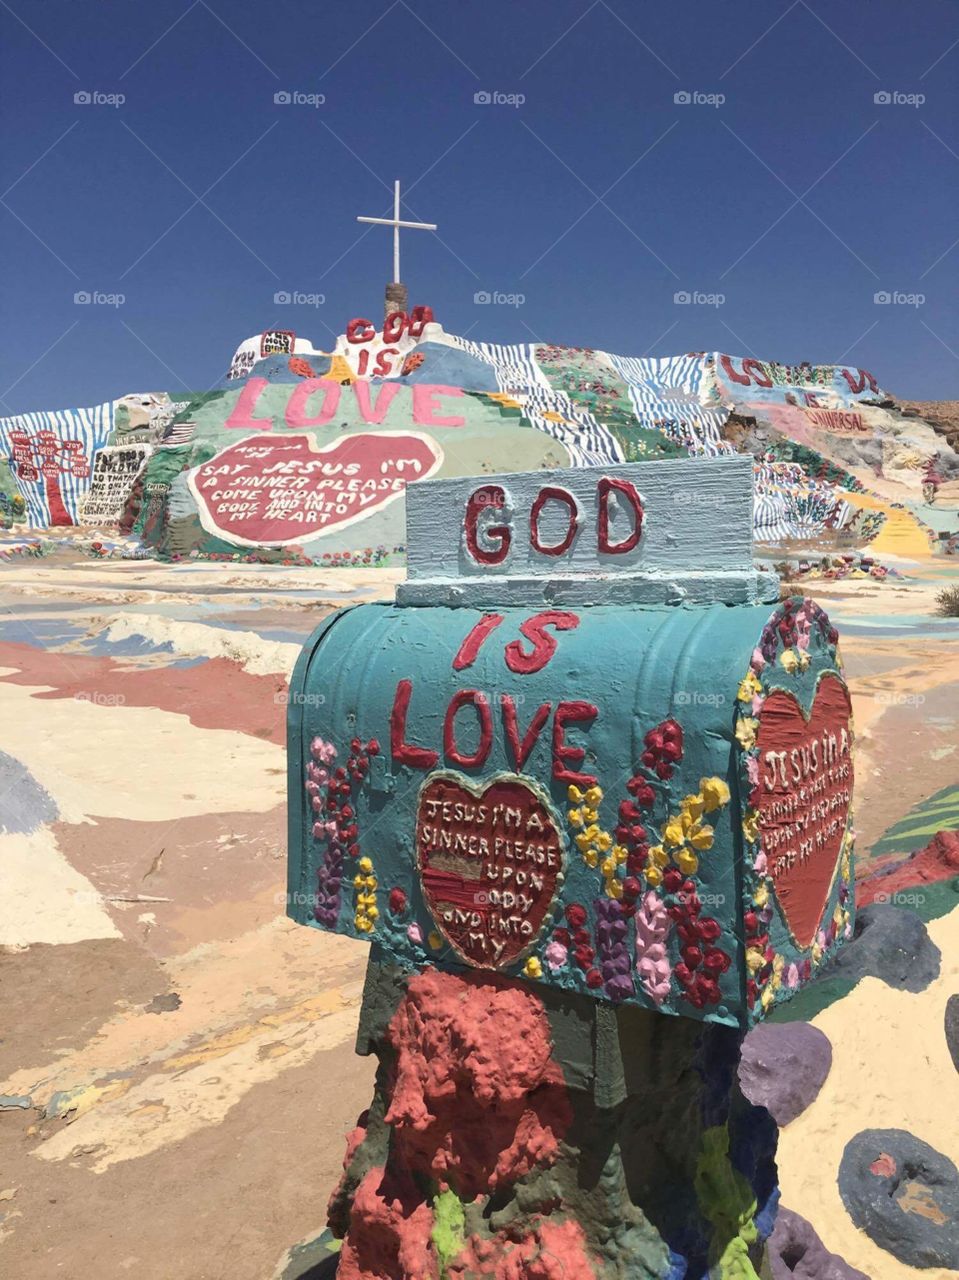 God is love - slab city, California. 